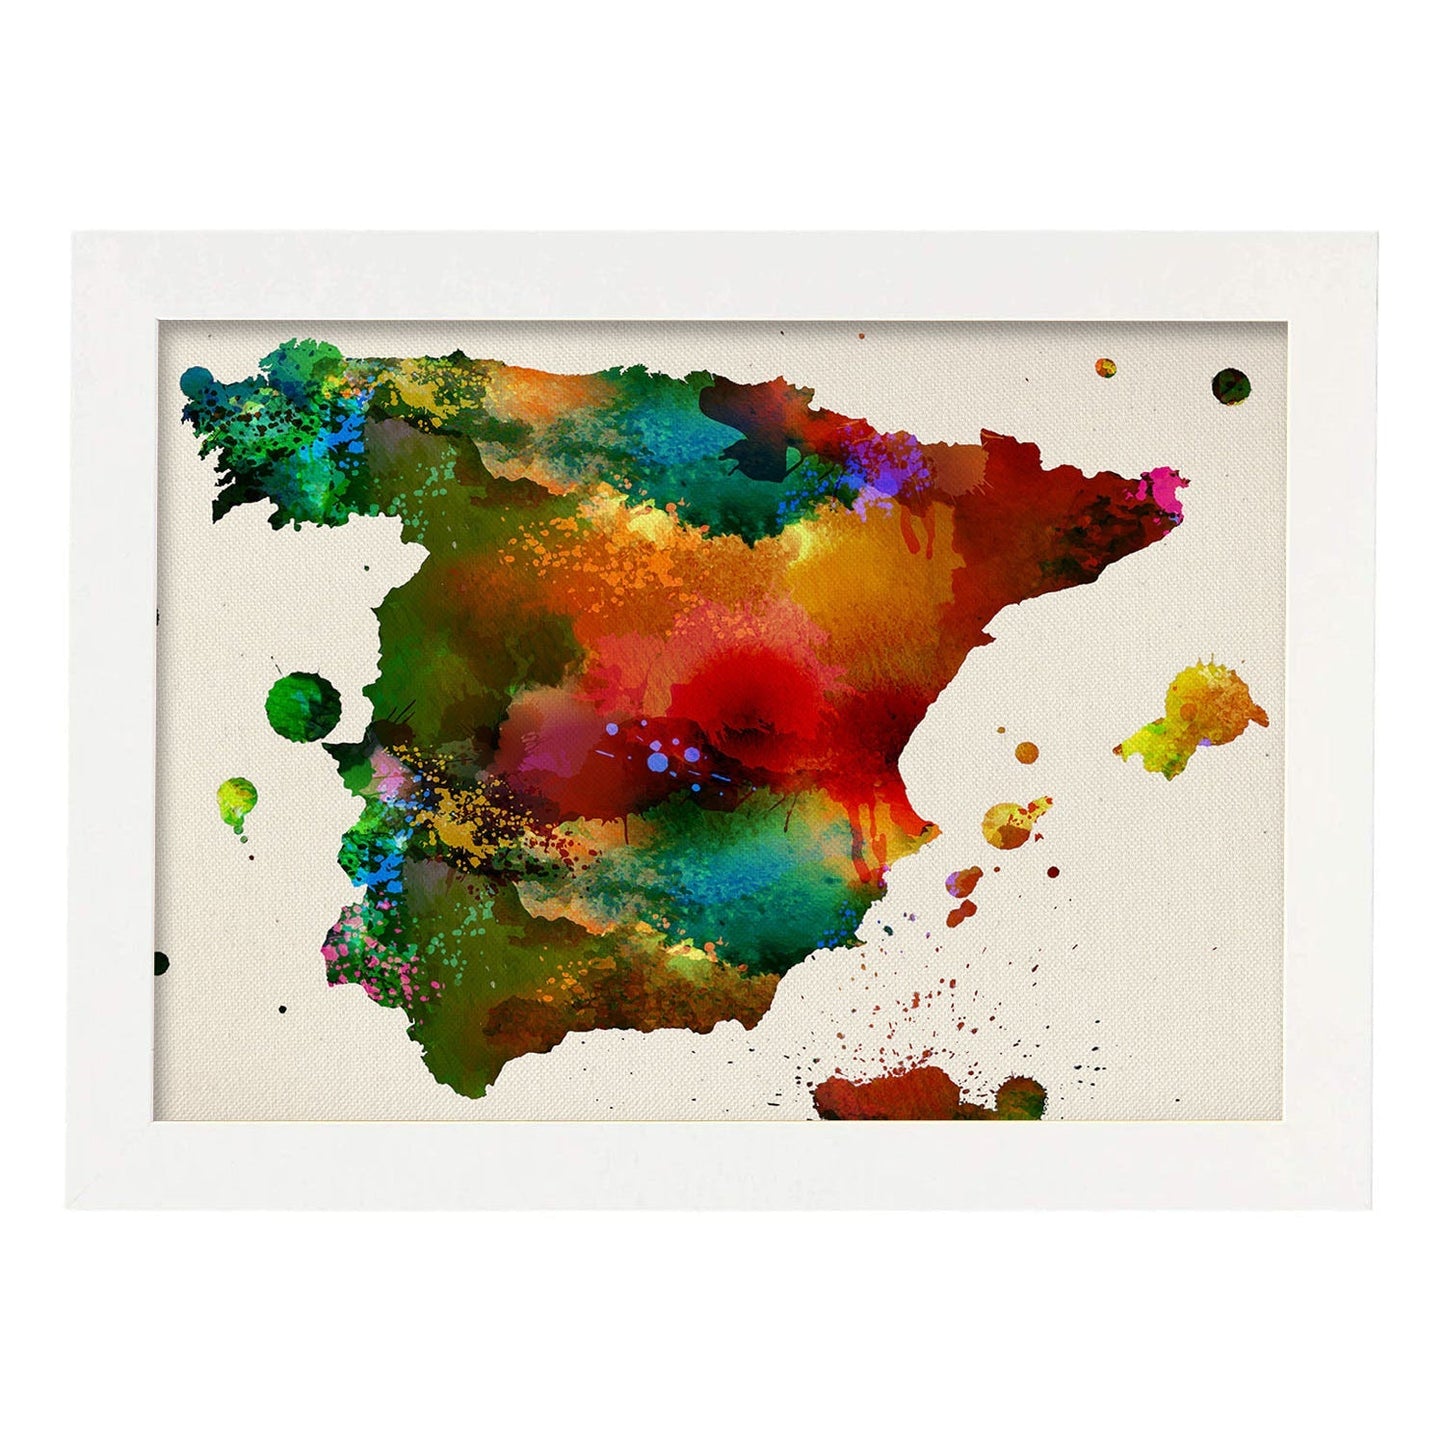 Poster de Mapa Espana 3. Láminas e ilustraciones de ciudades, comunidades, y mapas de España.-Artwork-Nacnic-A4-Marco Blanco-Nacnic Estudio SL